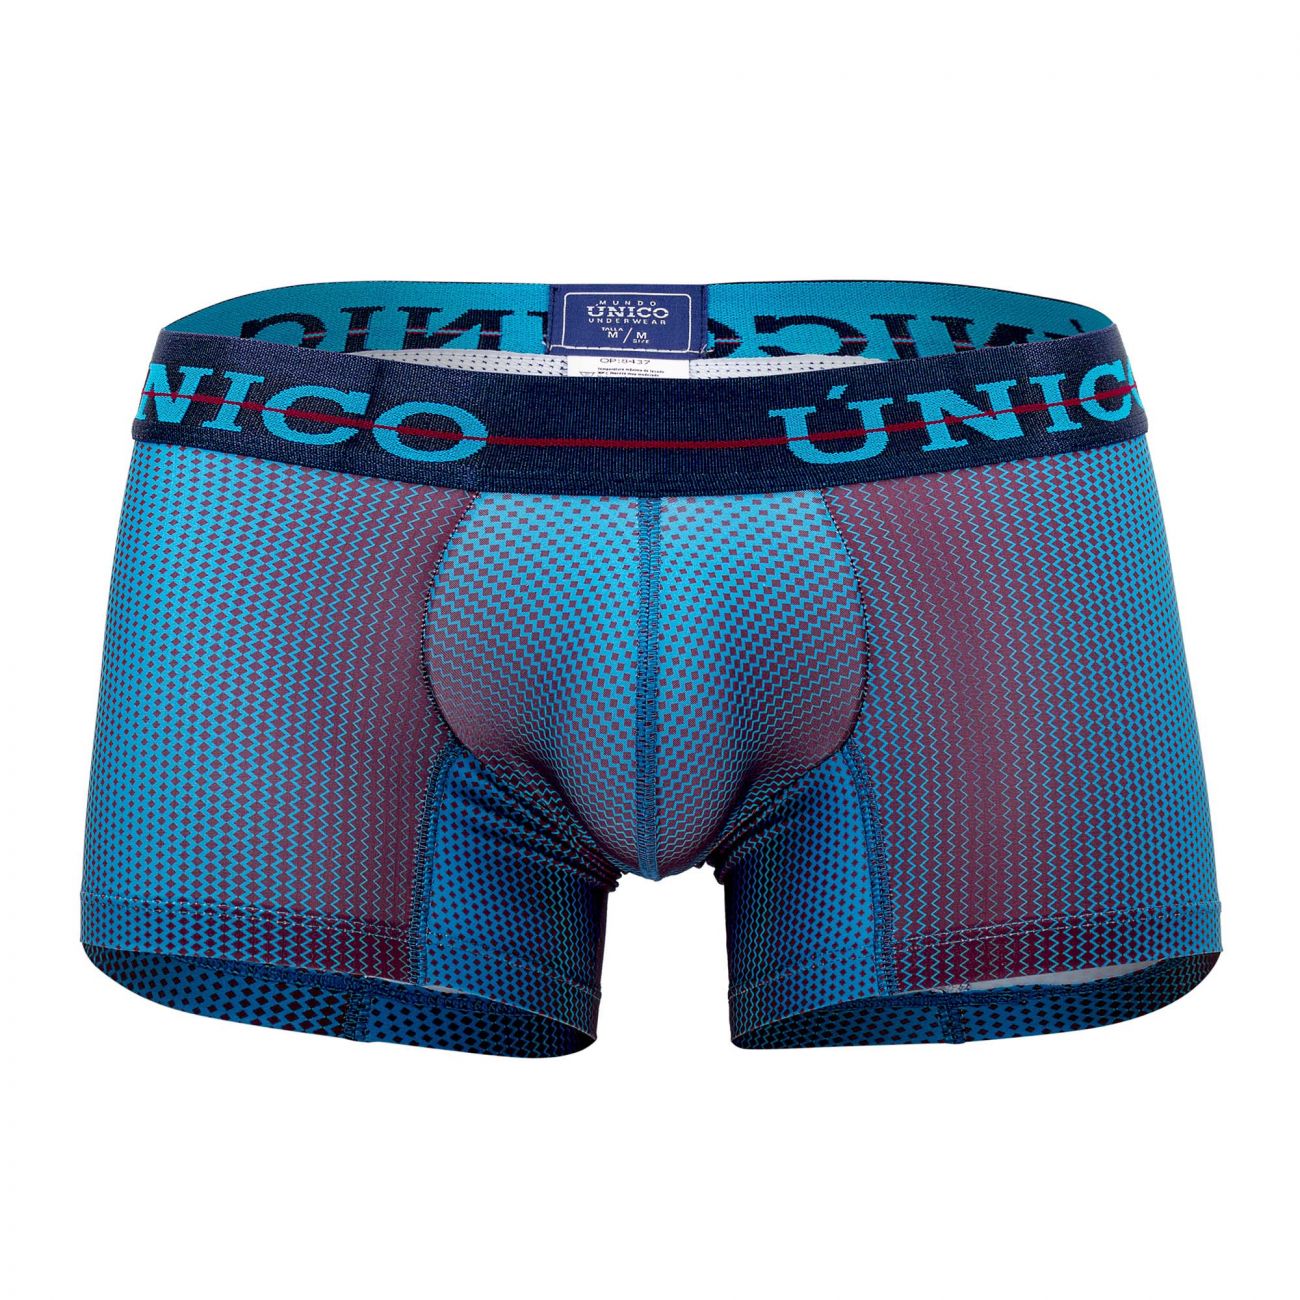 Unico 1907010014529 Trunks Tornasol Blue Printed